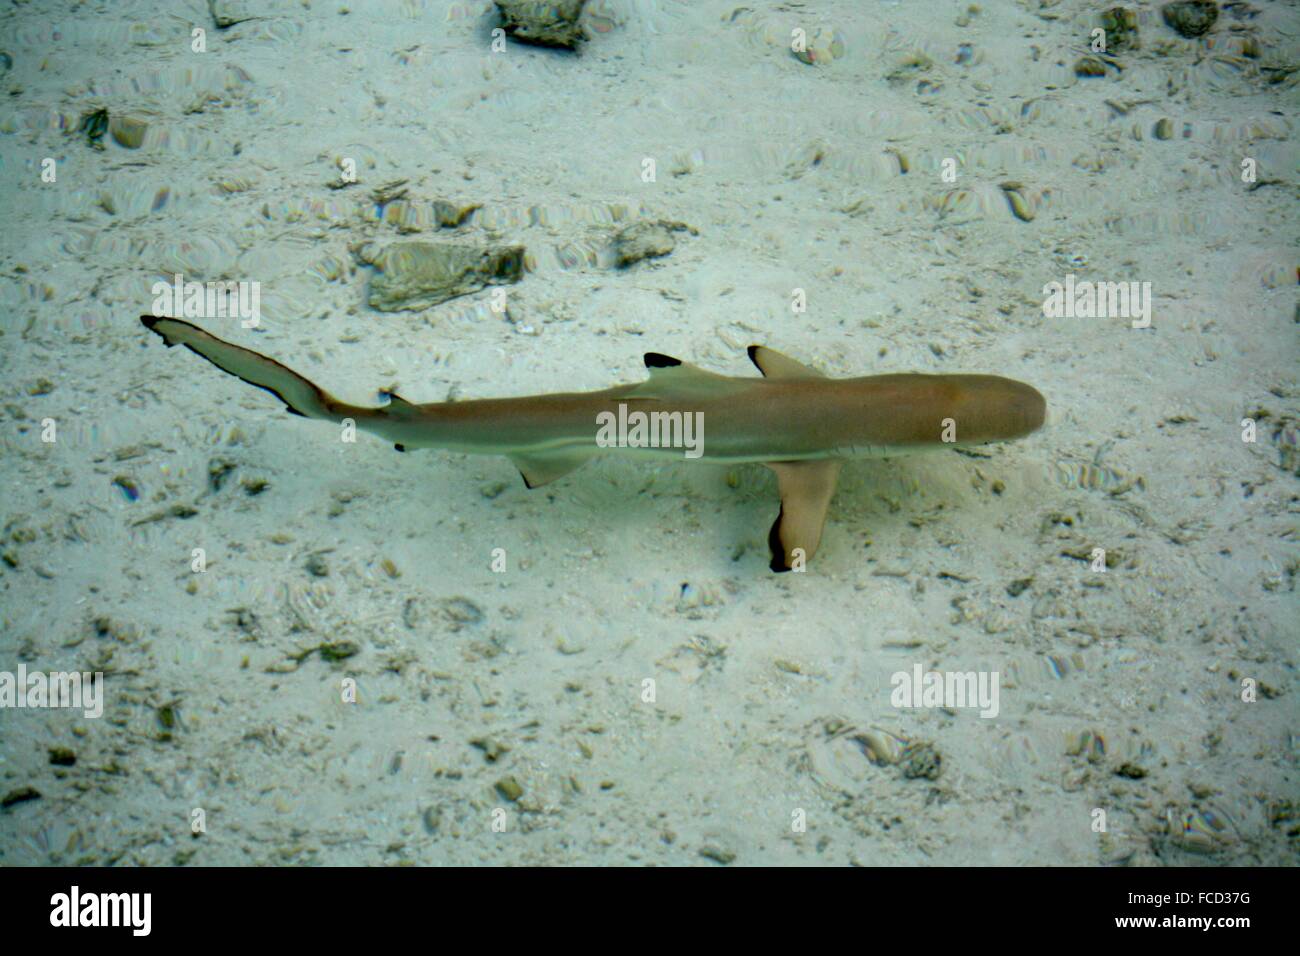 Vista submarina de pescado Foto de stock